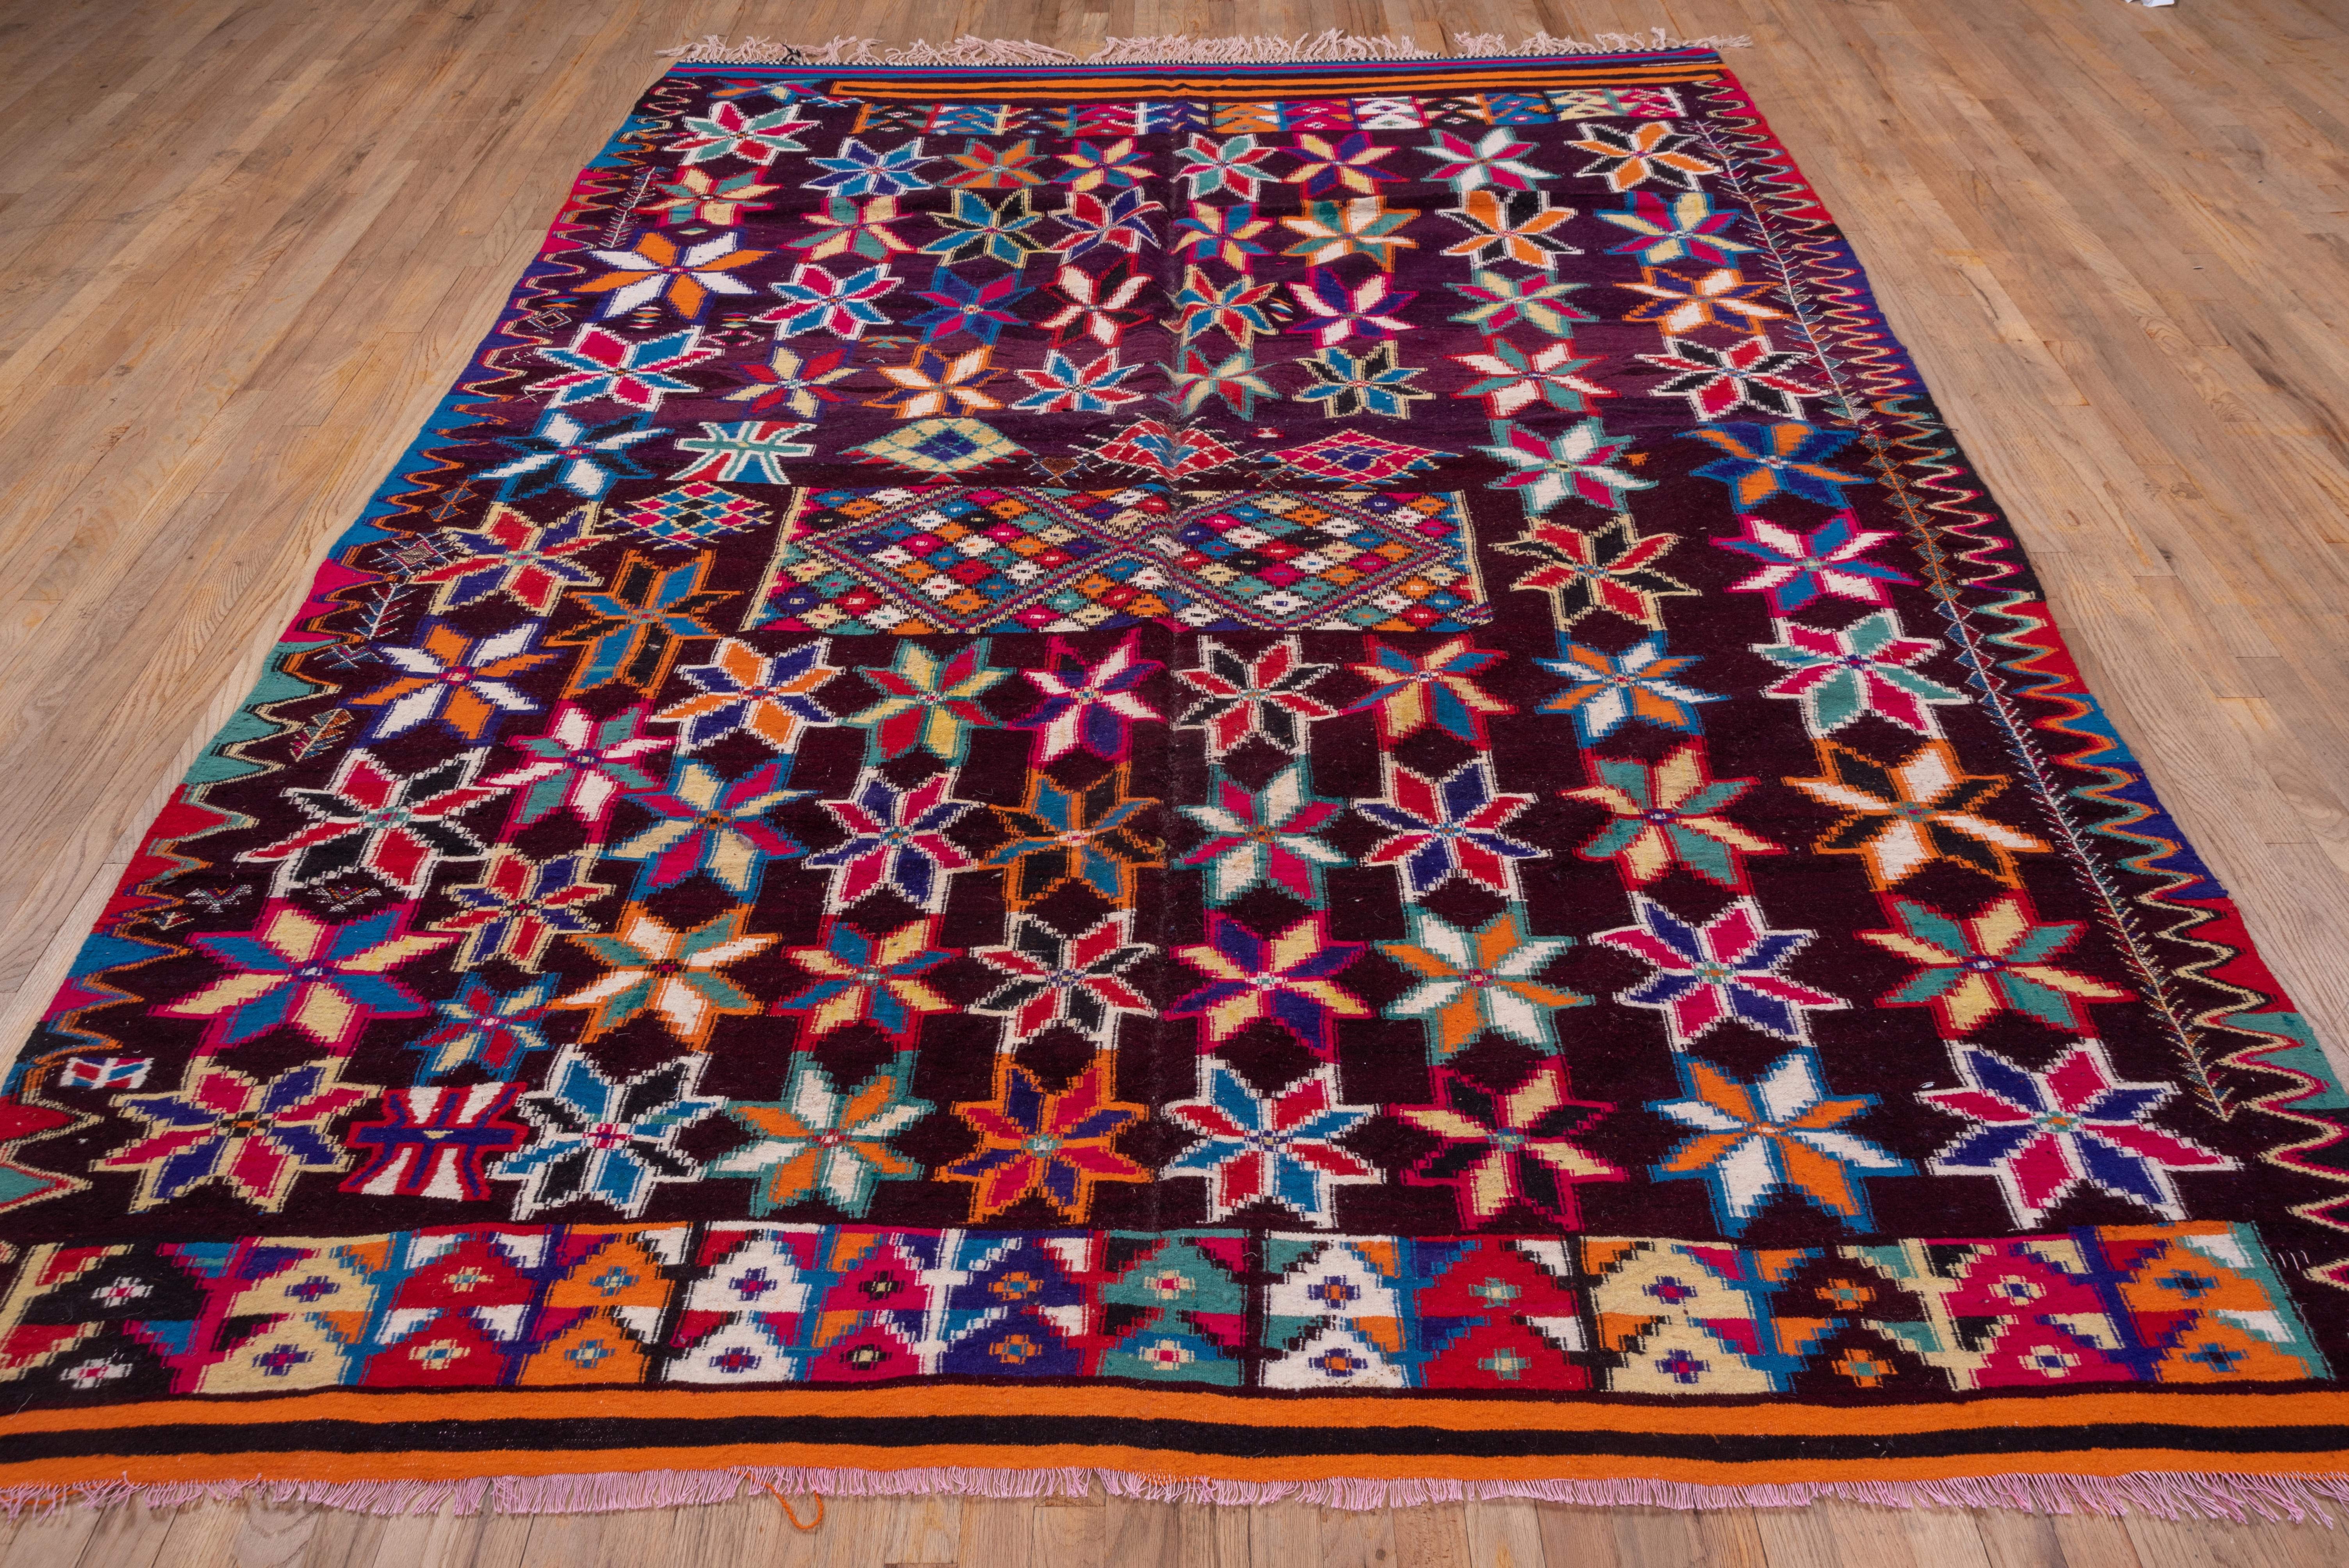 Late 20th Century Colorful Moroccan Kilim Carpet For Sale